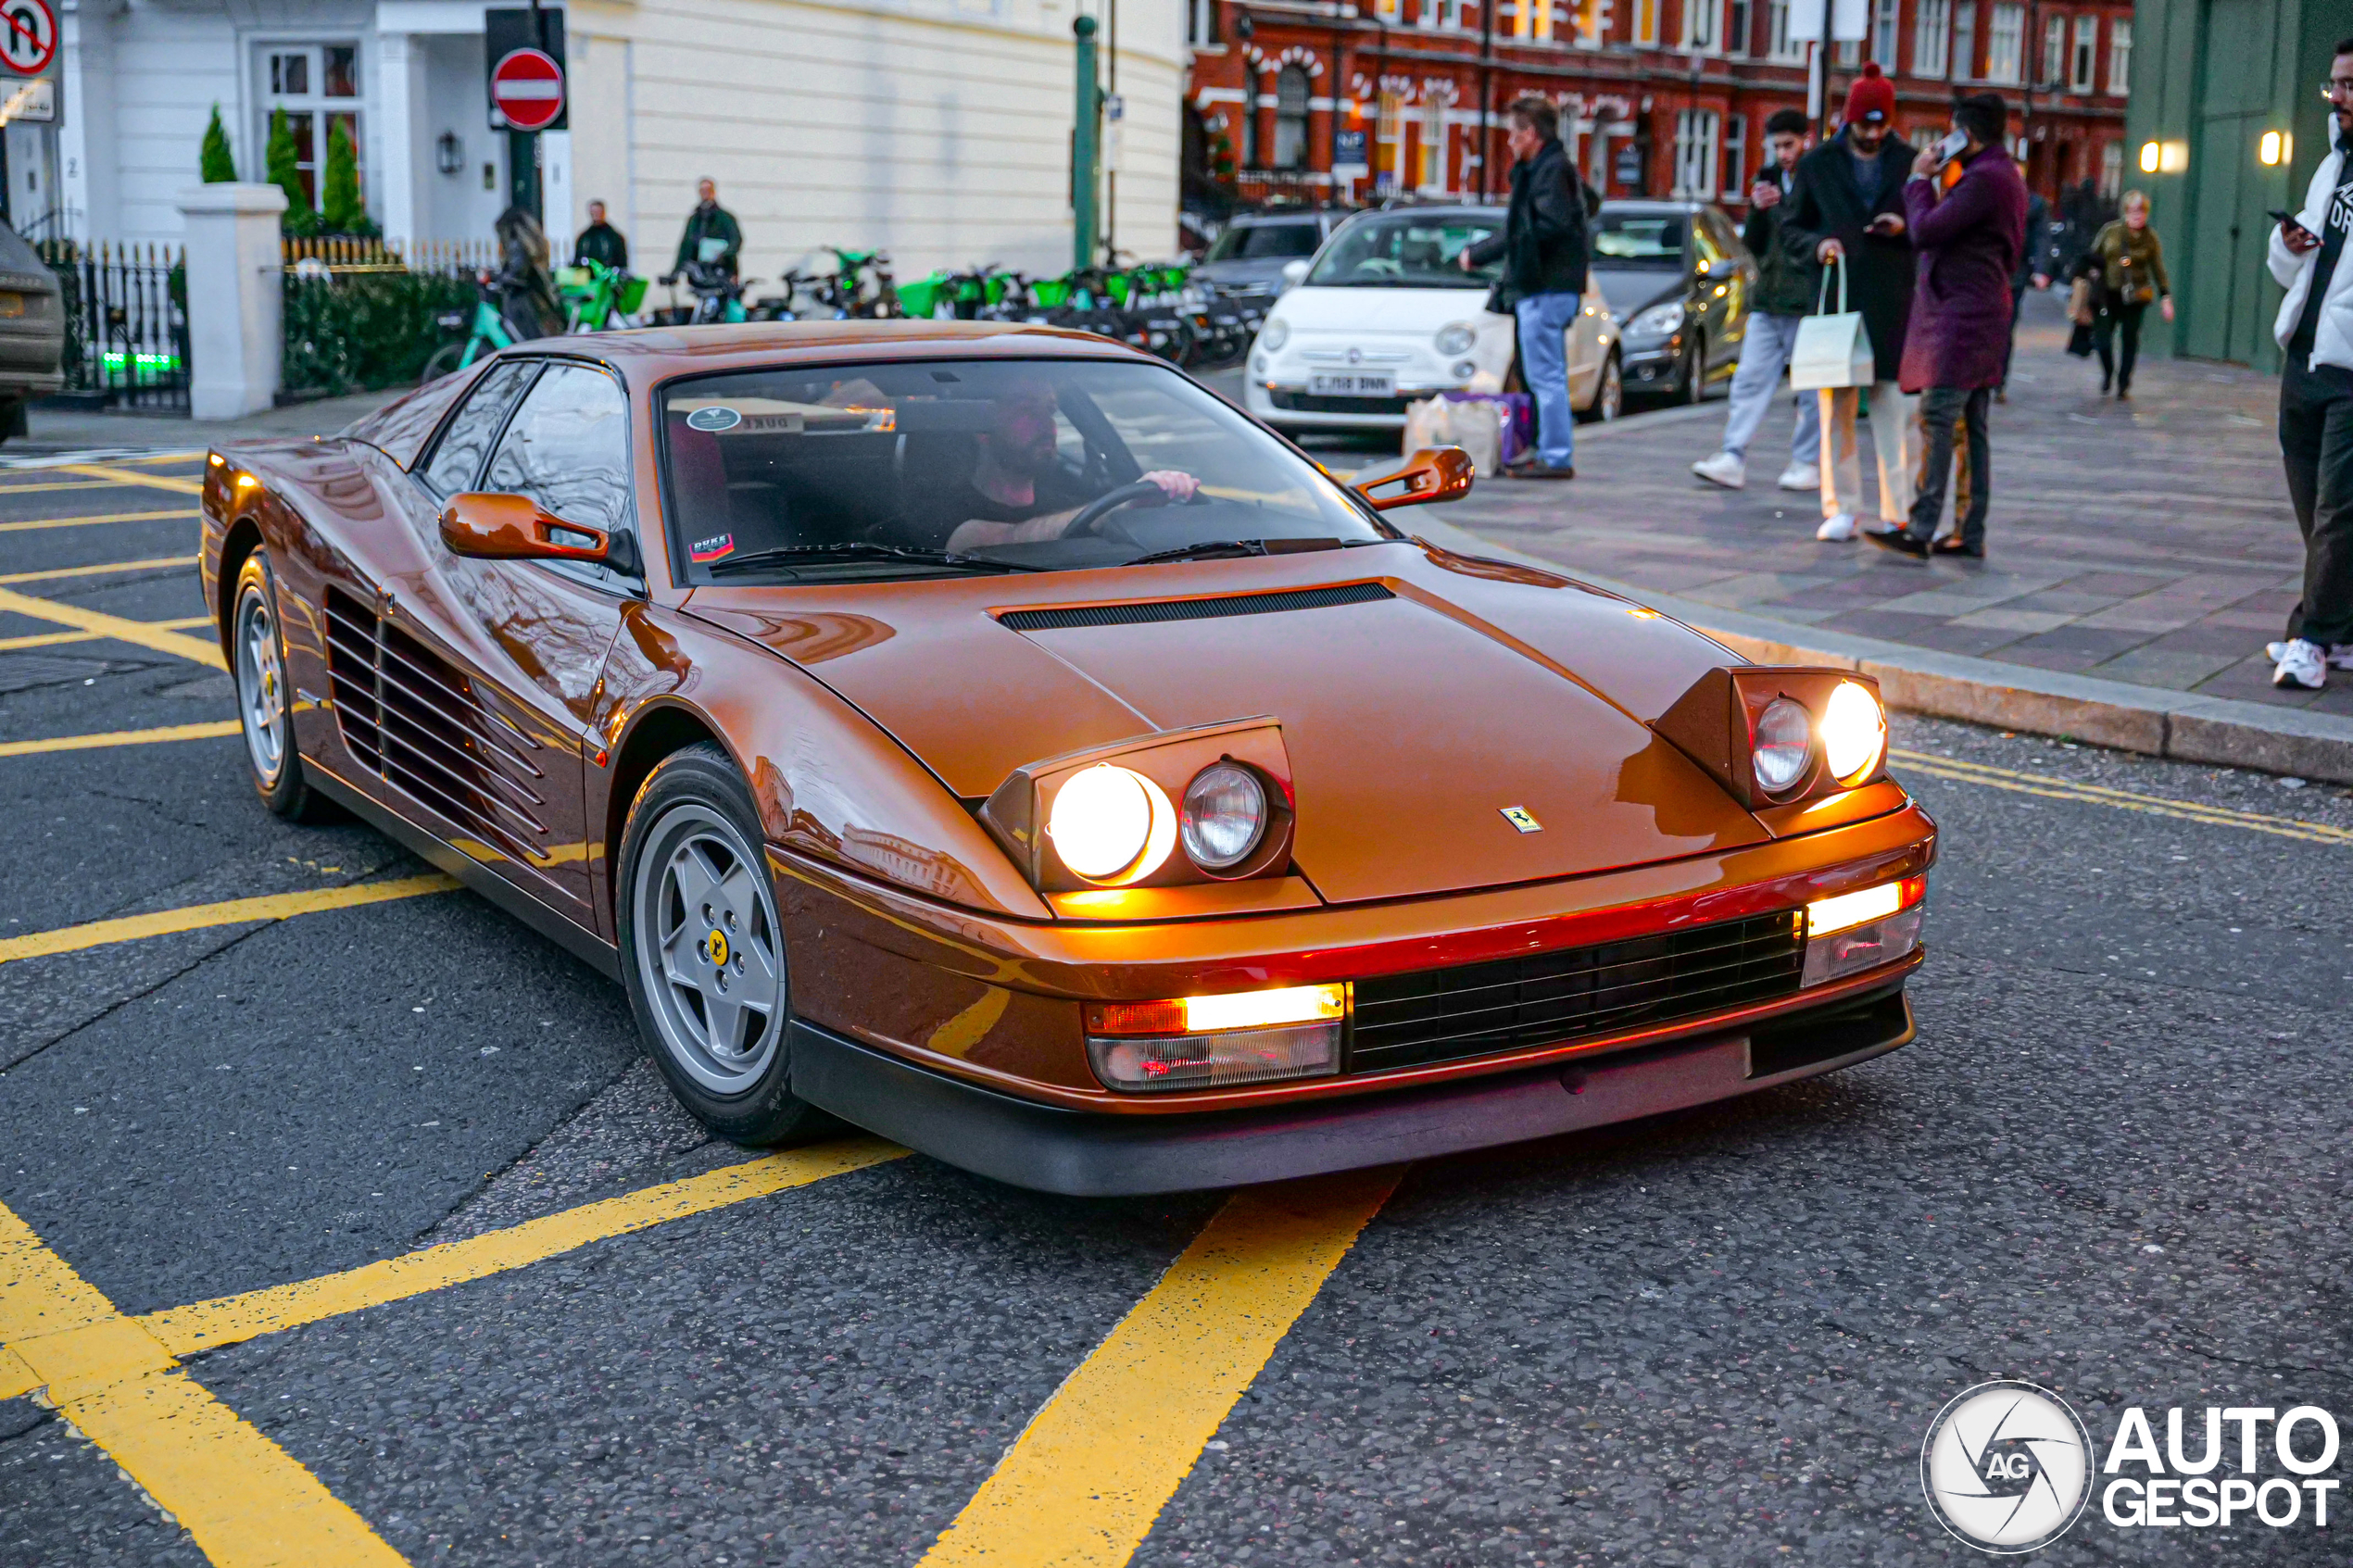 Celebrating Christmas in style: A unique Ferrari Testarossa spotted in London's glamorous car scene